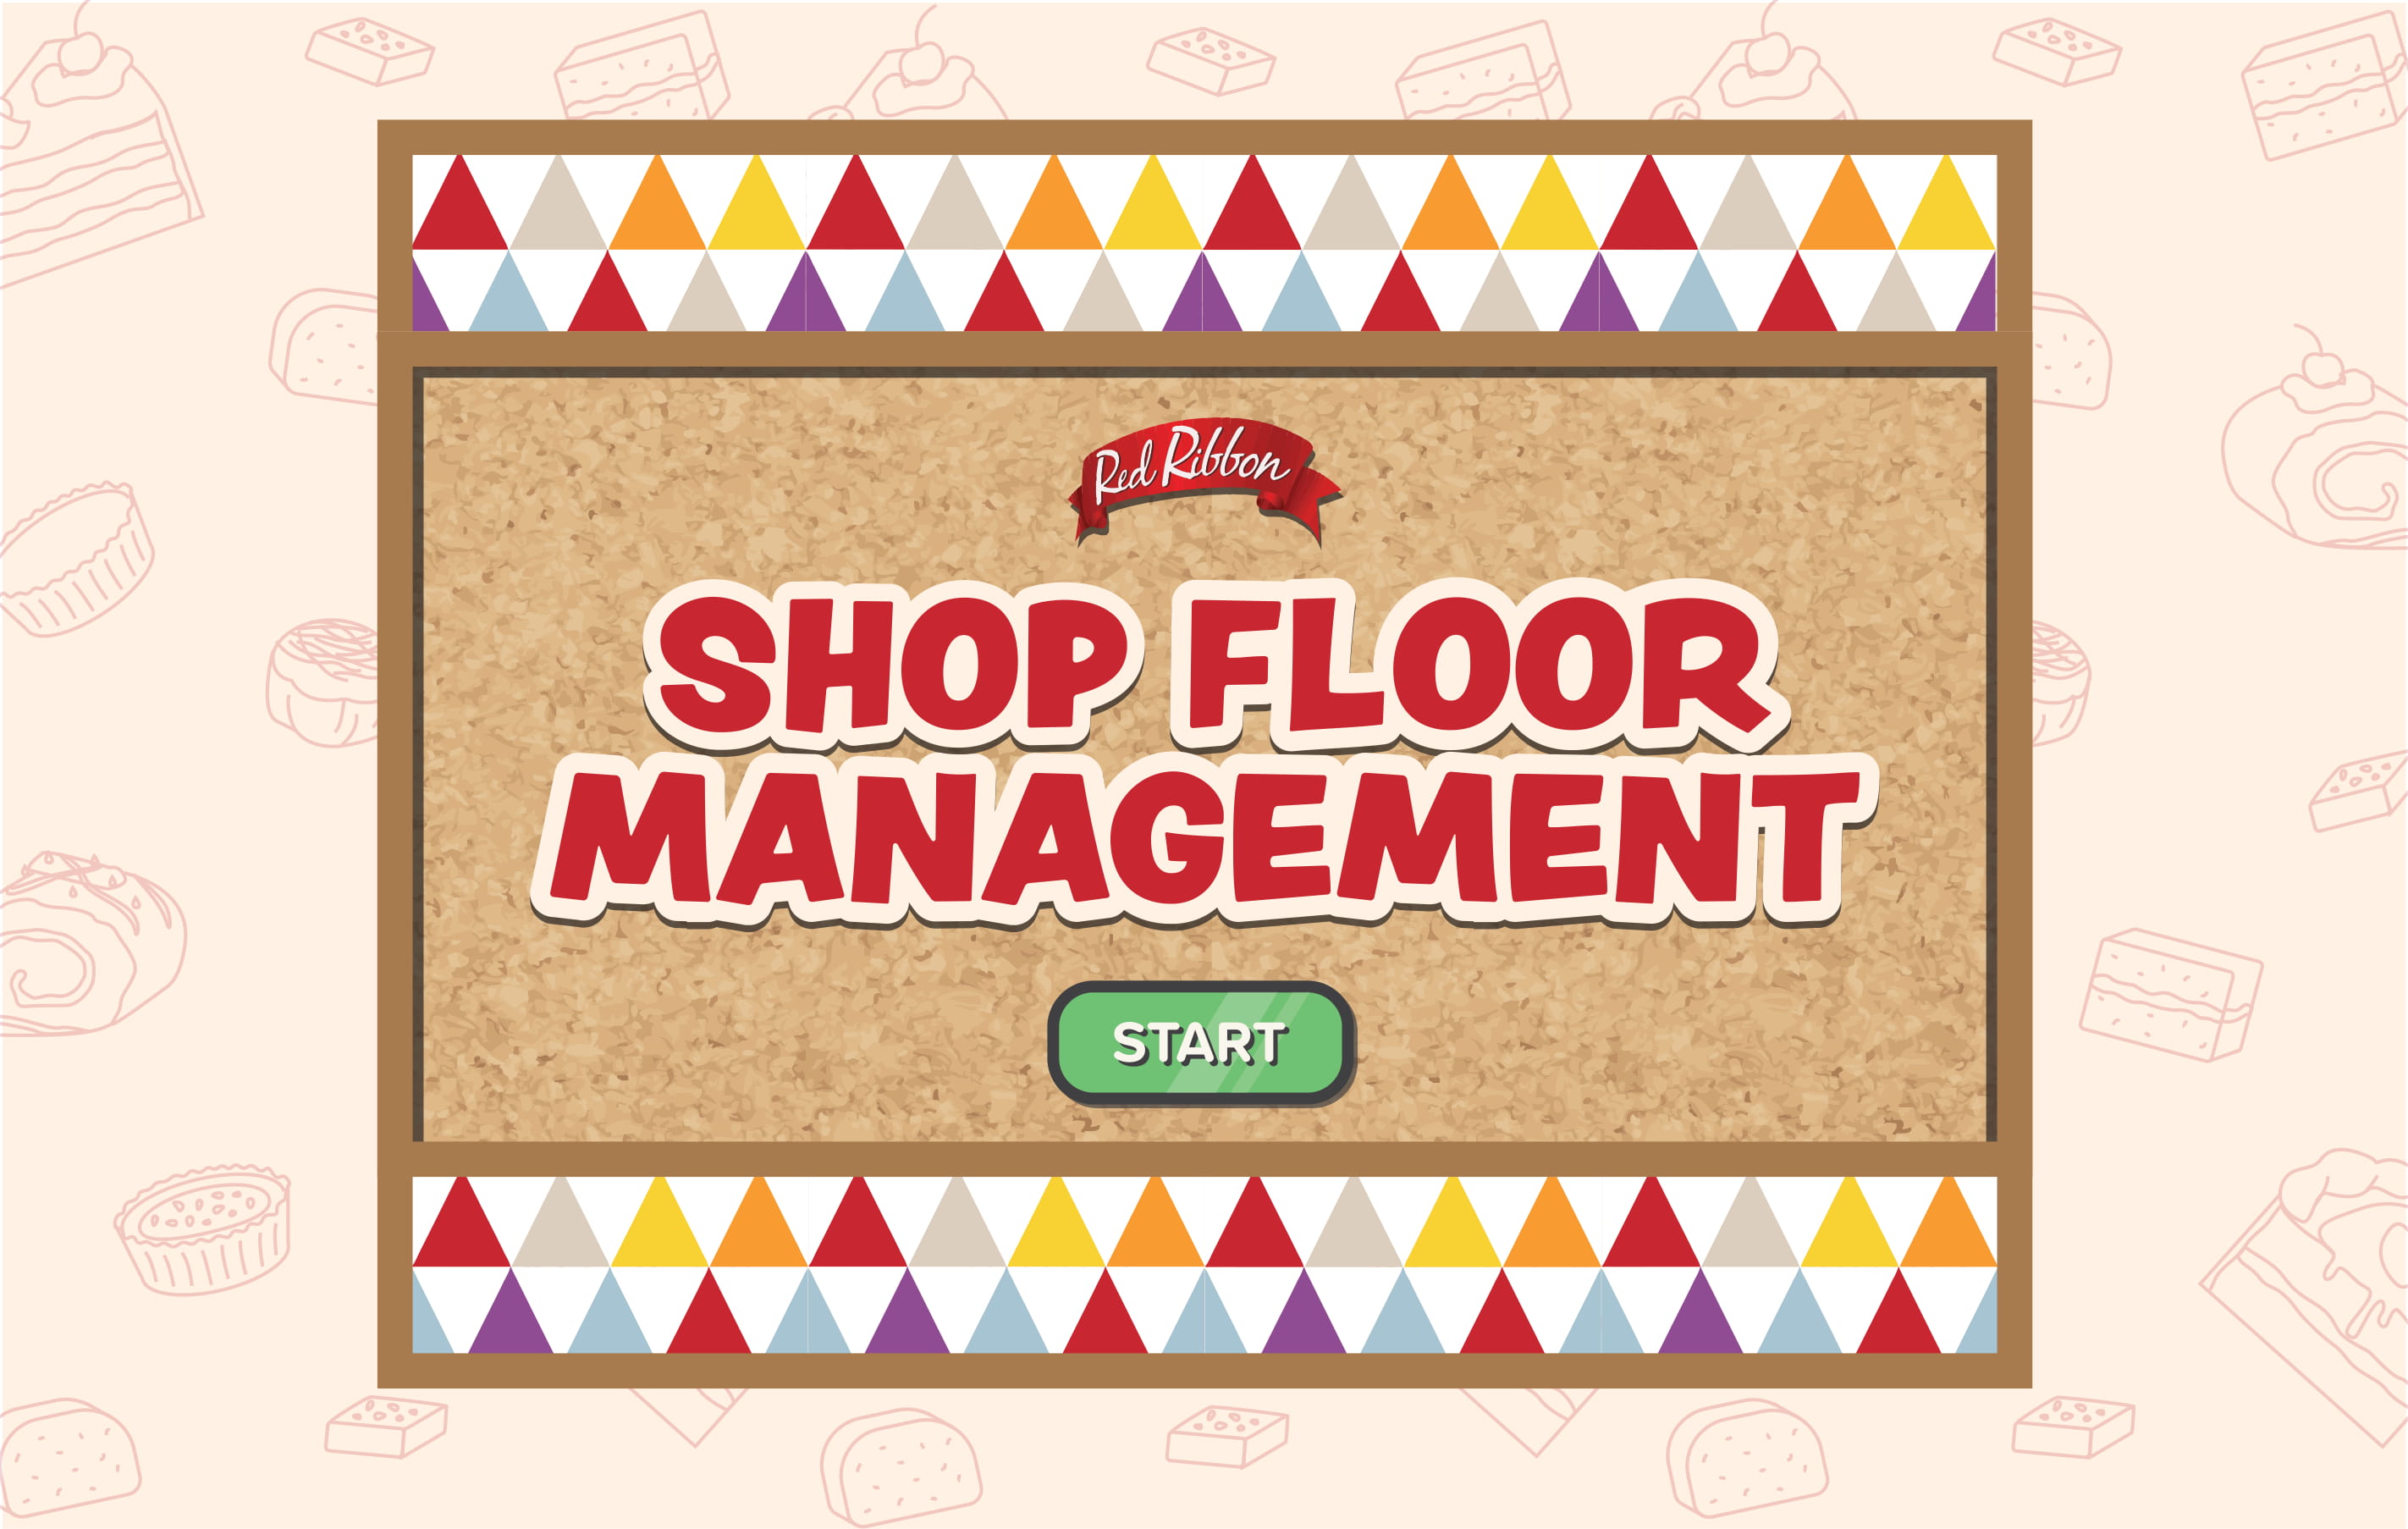 Red Ribbon - Shop Floor Management